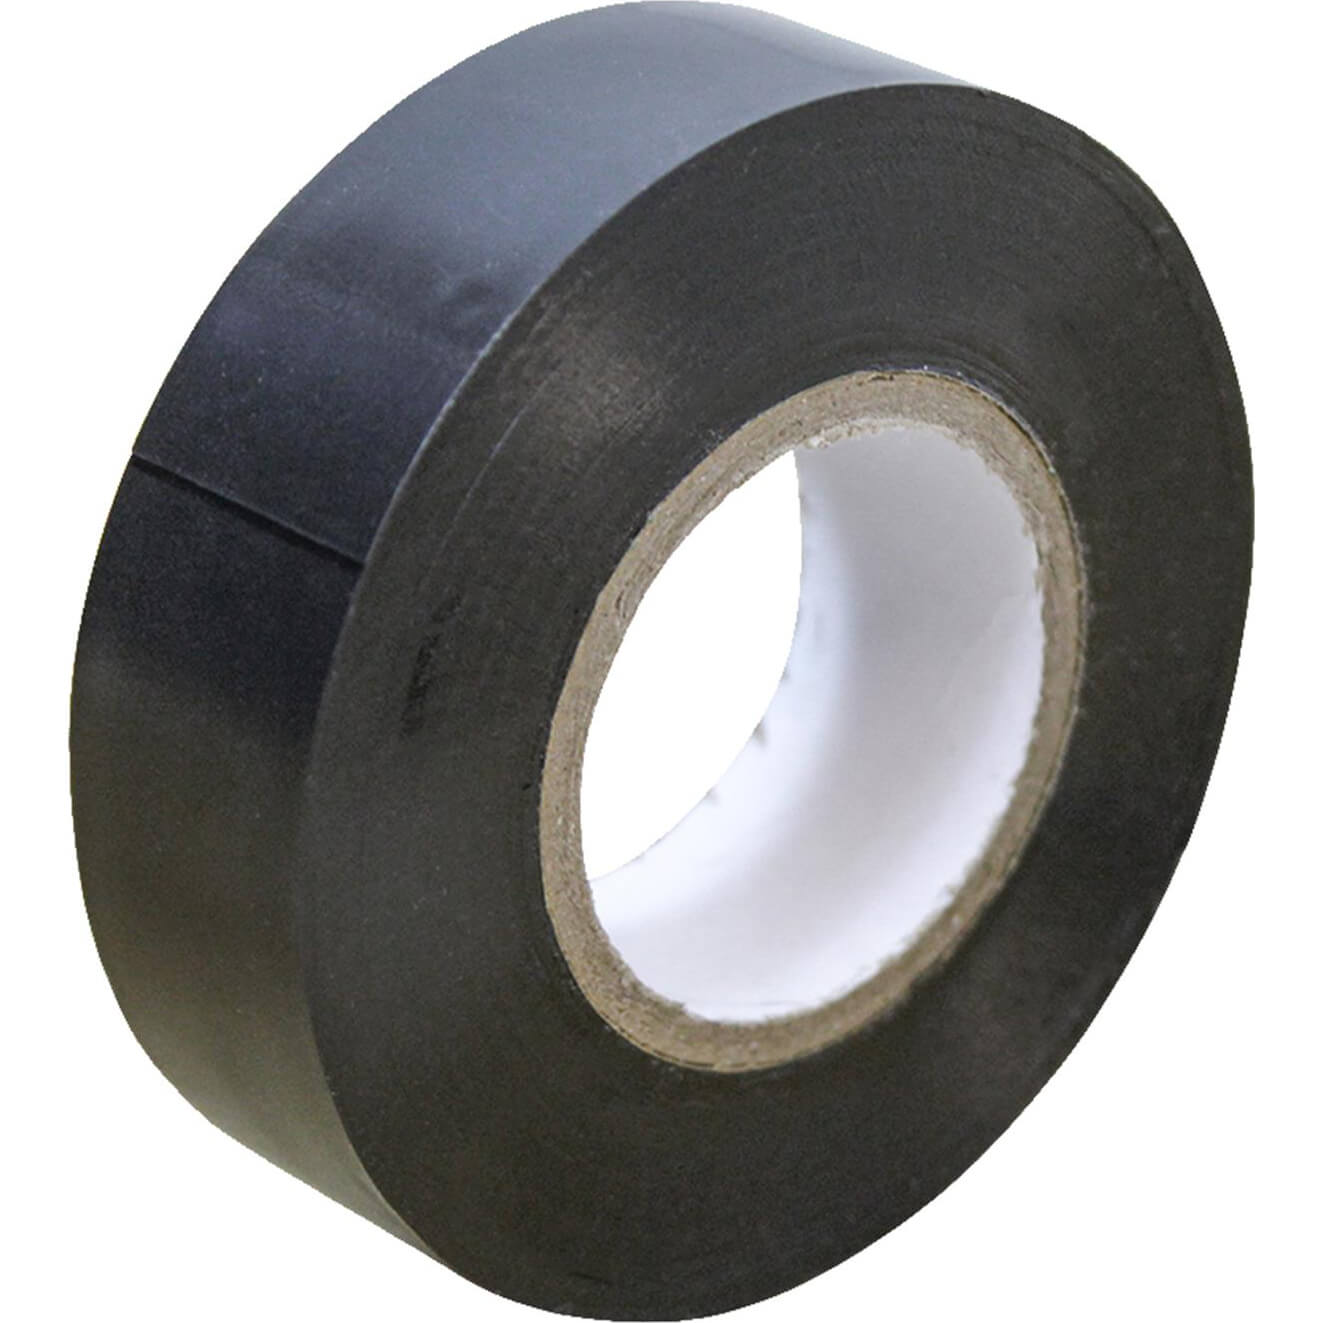 Insulation Tape Black 50mm Wide x 33m Roll